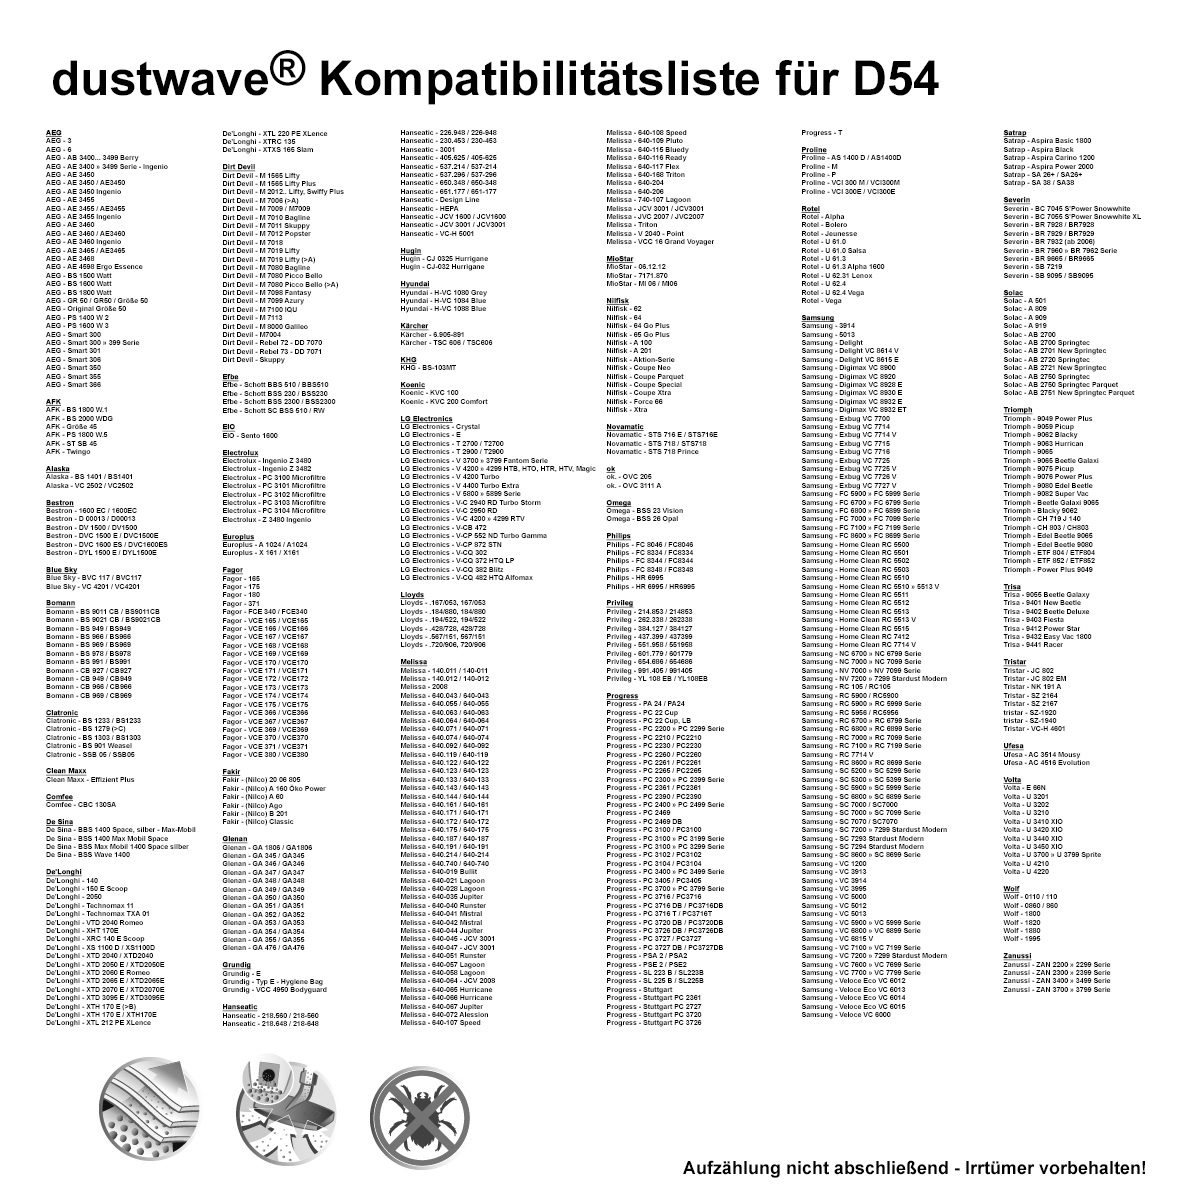 1x dustwave® Staubsaugerbeutel passend für AmazonBasics Staubsauger 1,5l kompatibel mit Amazon Basics G51, Swirl Y05, Menalux 1840, VCB35B15CEU4